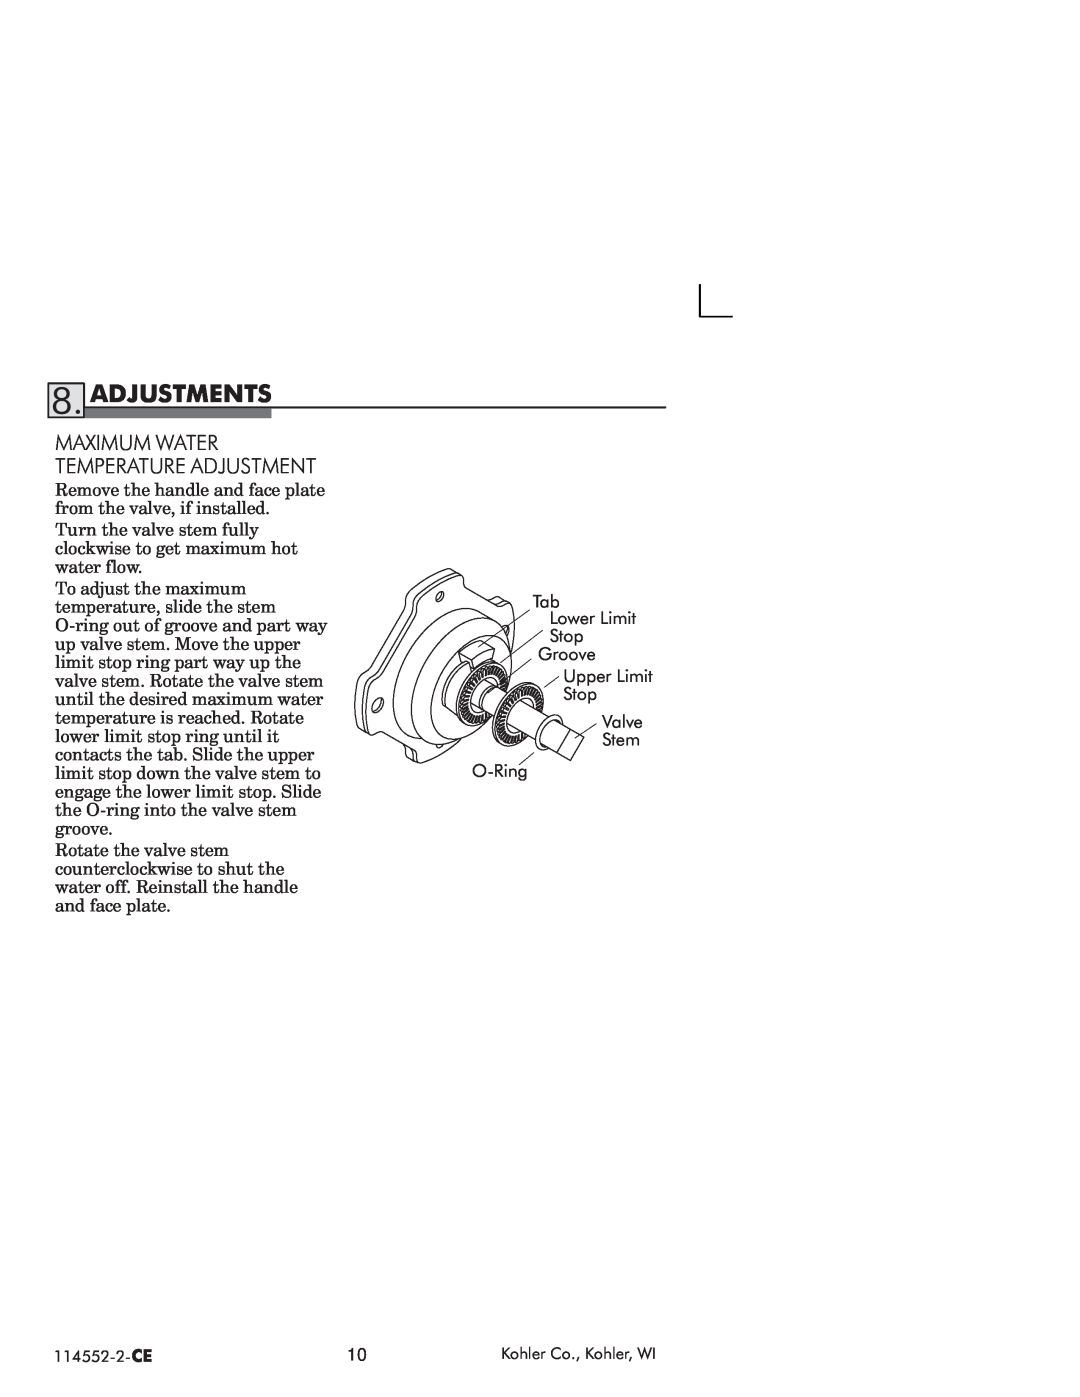 Kohler 114522-2-CE manual Adjustments, Mximum Wter Temperture Djustment 